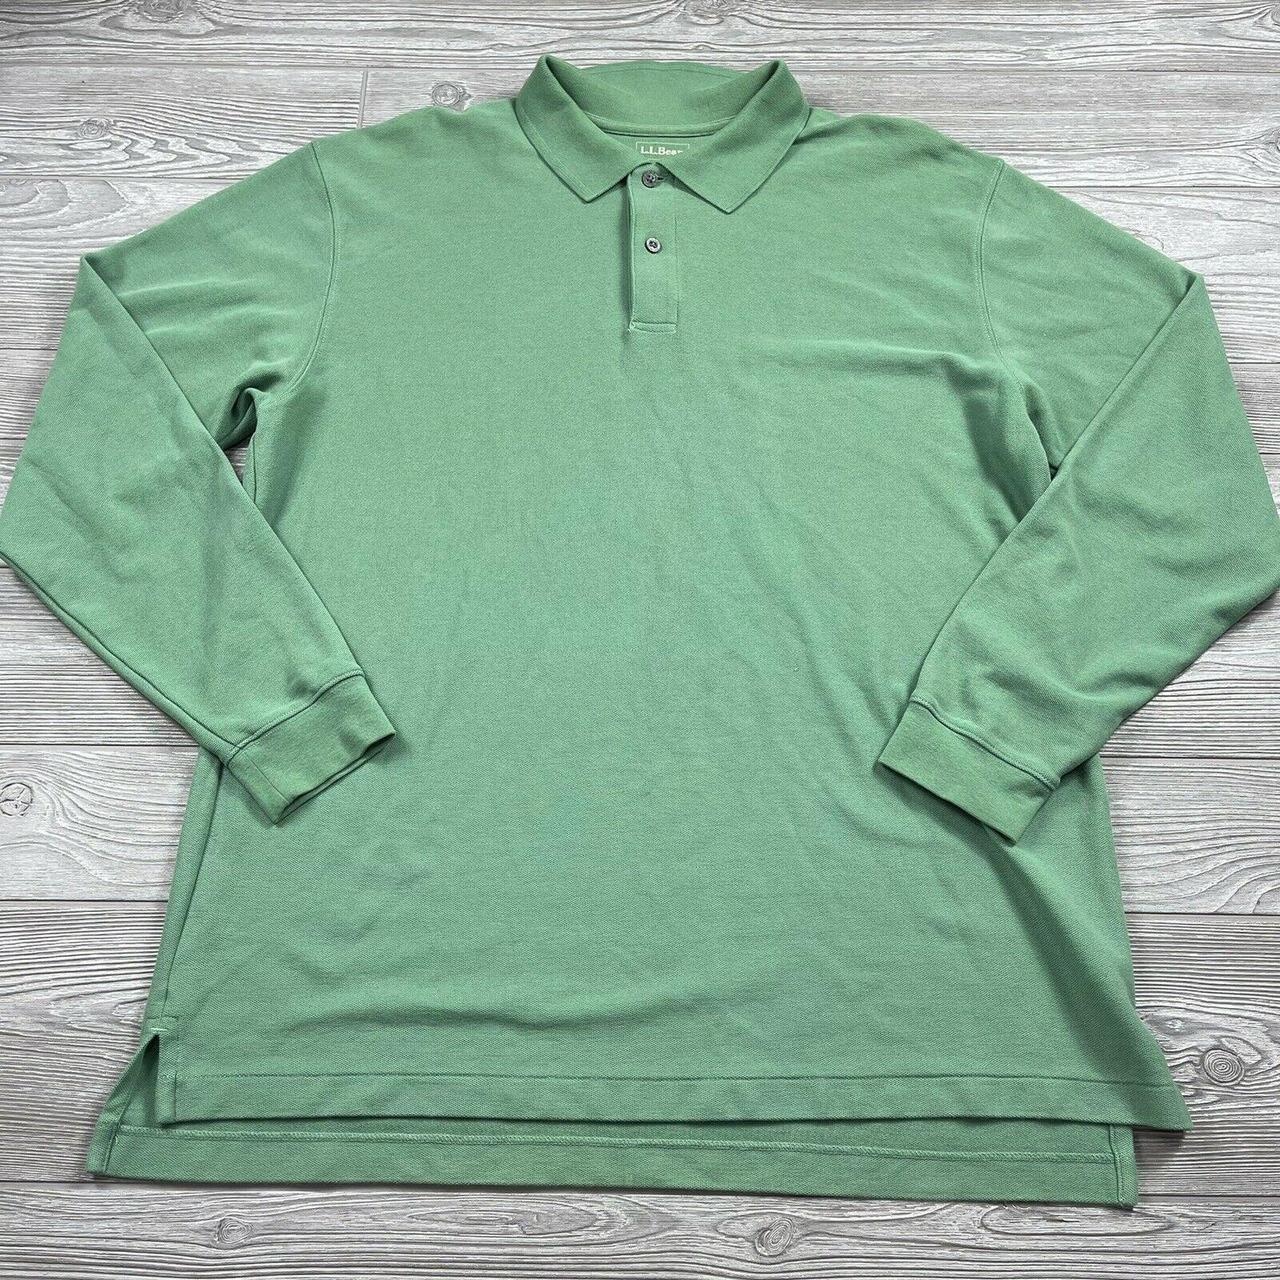 LL Bean Rugby Shirt Mens Large Green Long Sleeve... - Depop